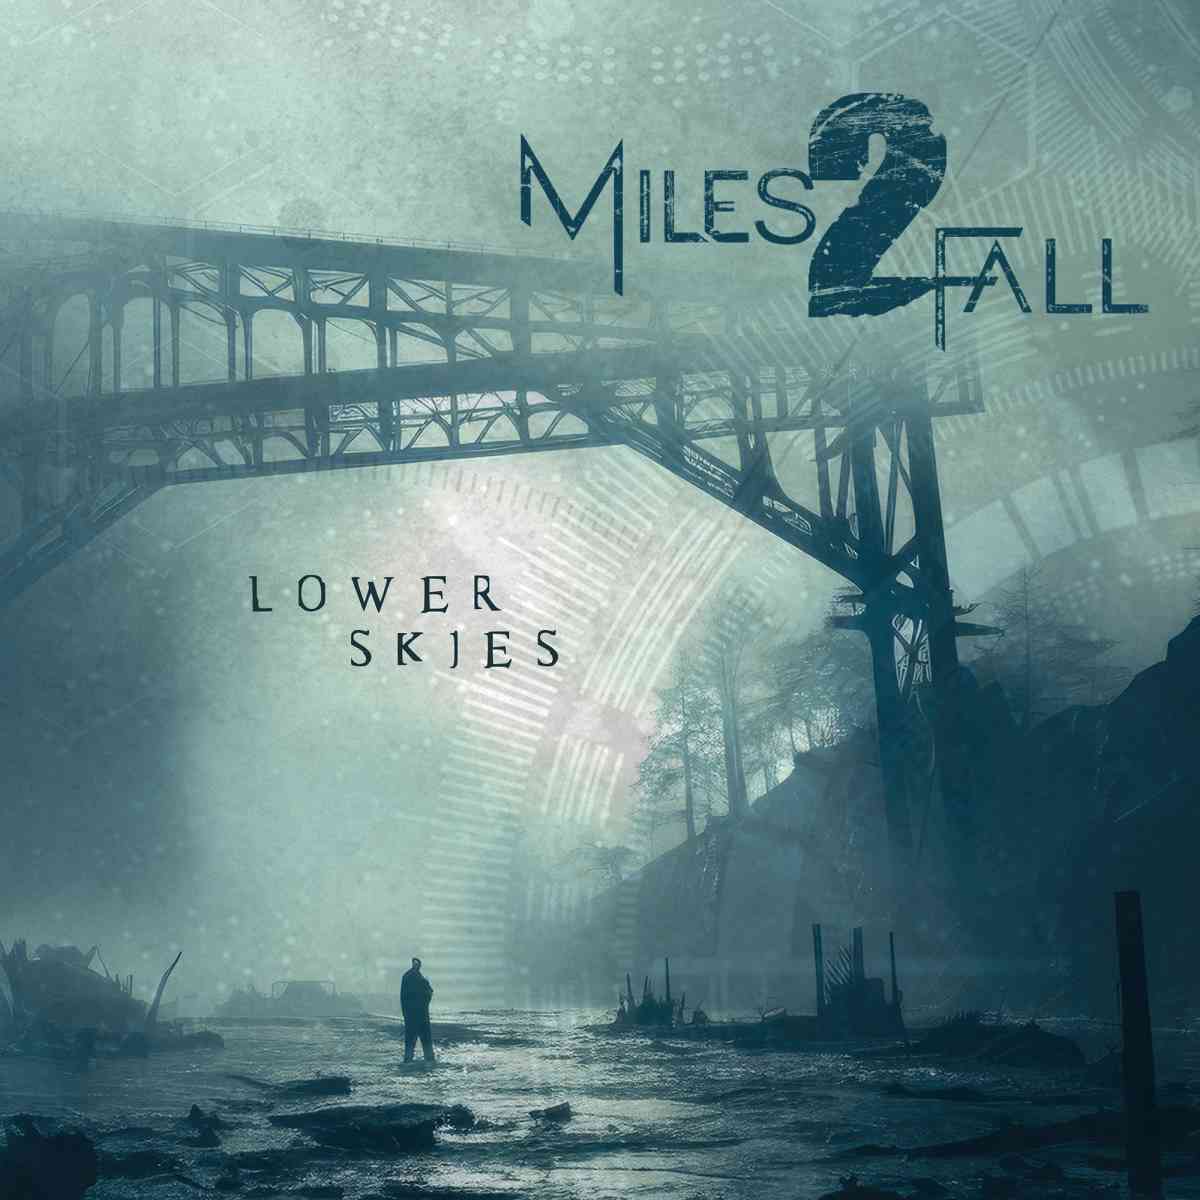 miles2fall - lower skies - album cover